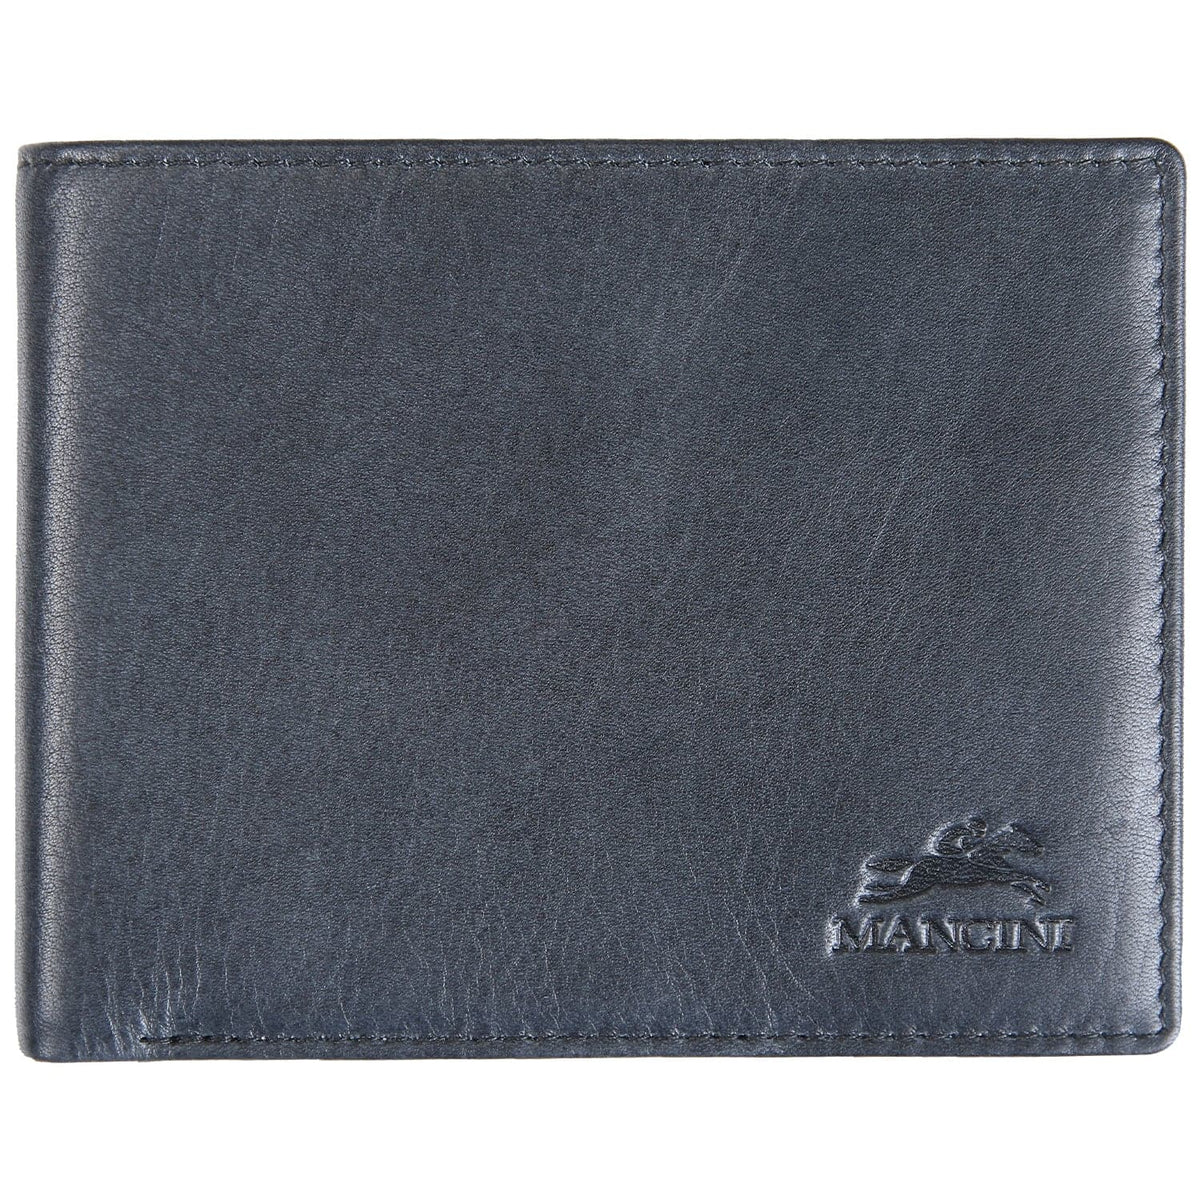 Mancini Bellagio RFID Billfold with Coin Pocket